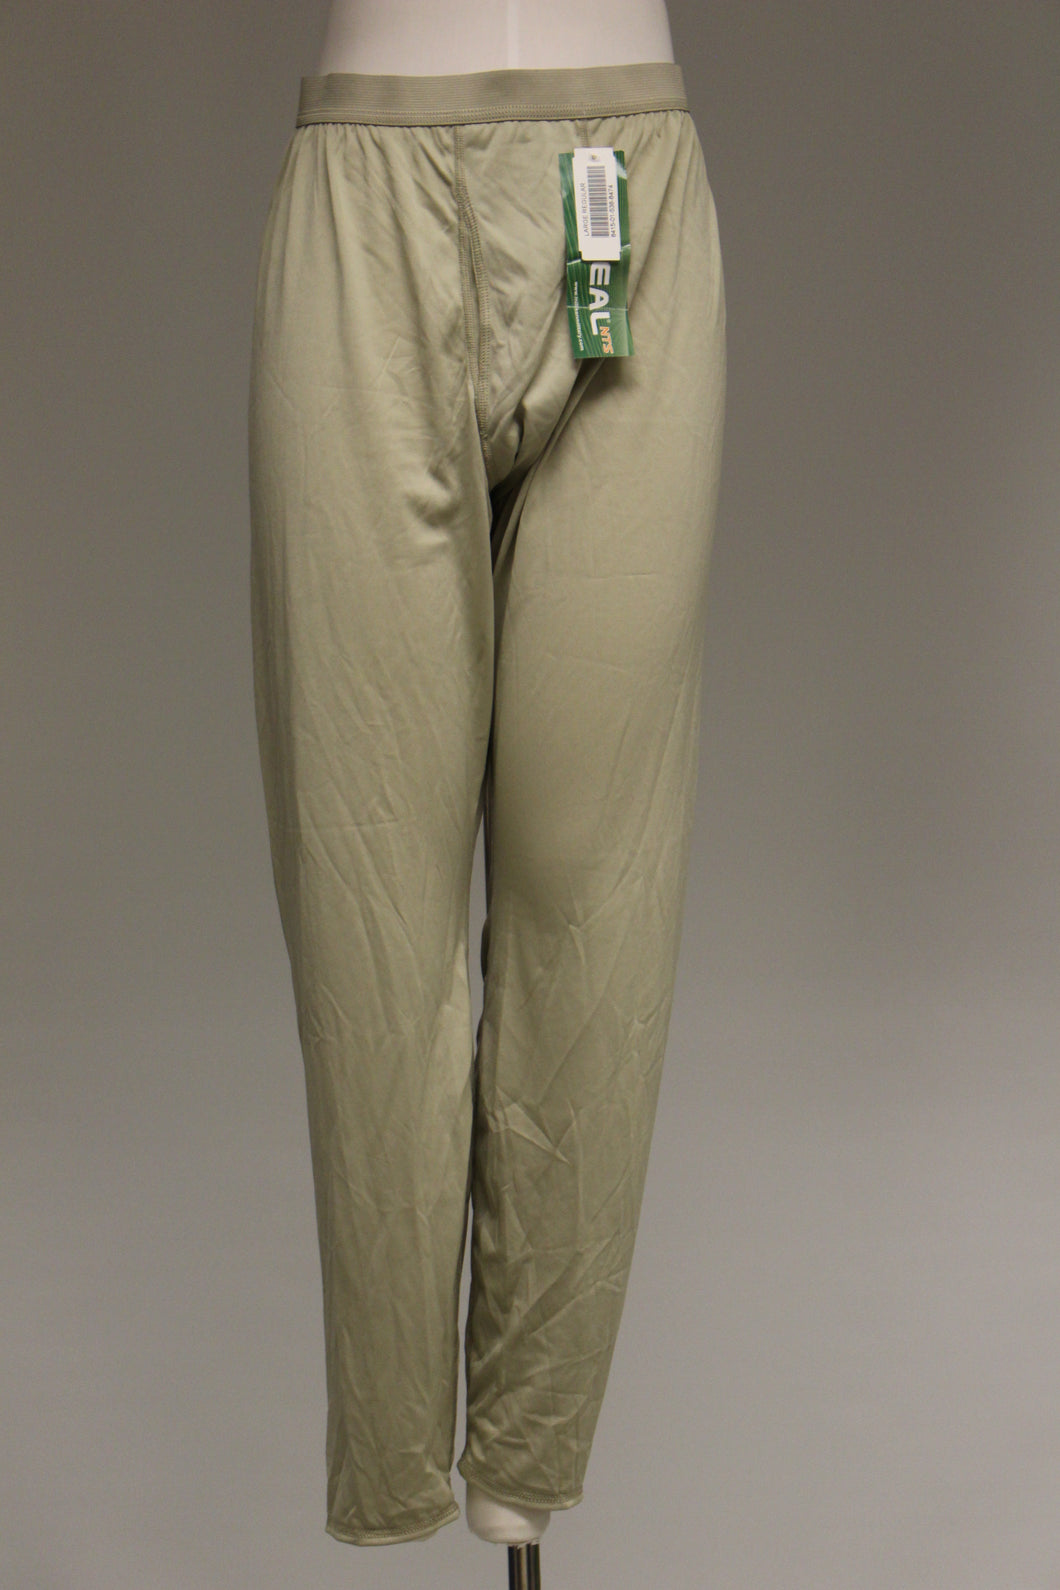 Gen III Cold Weather Lightweight Long John Pants Drawers - Tan - XLarge Long - New